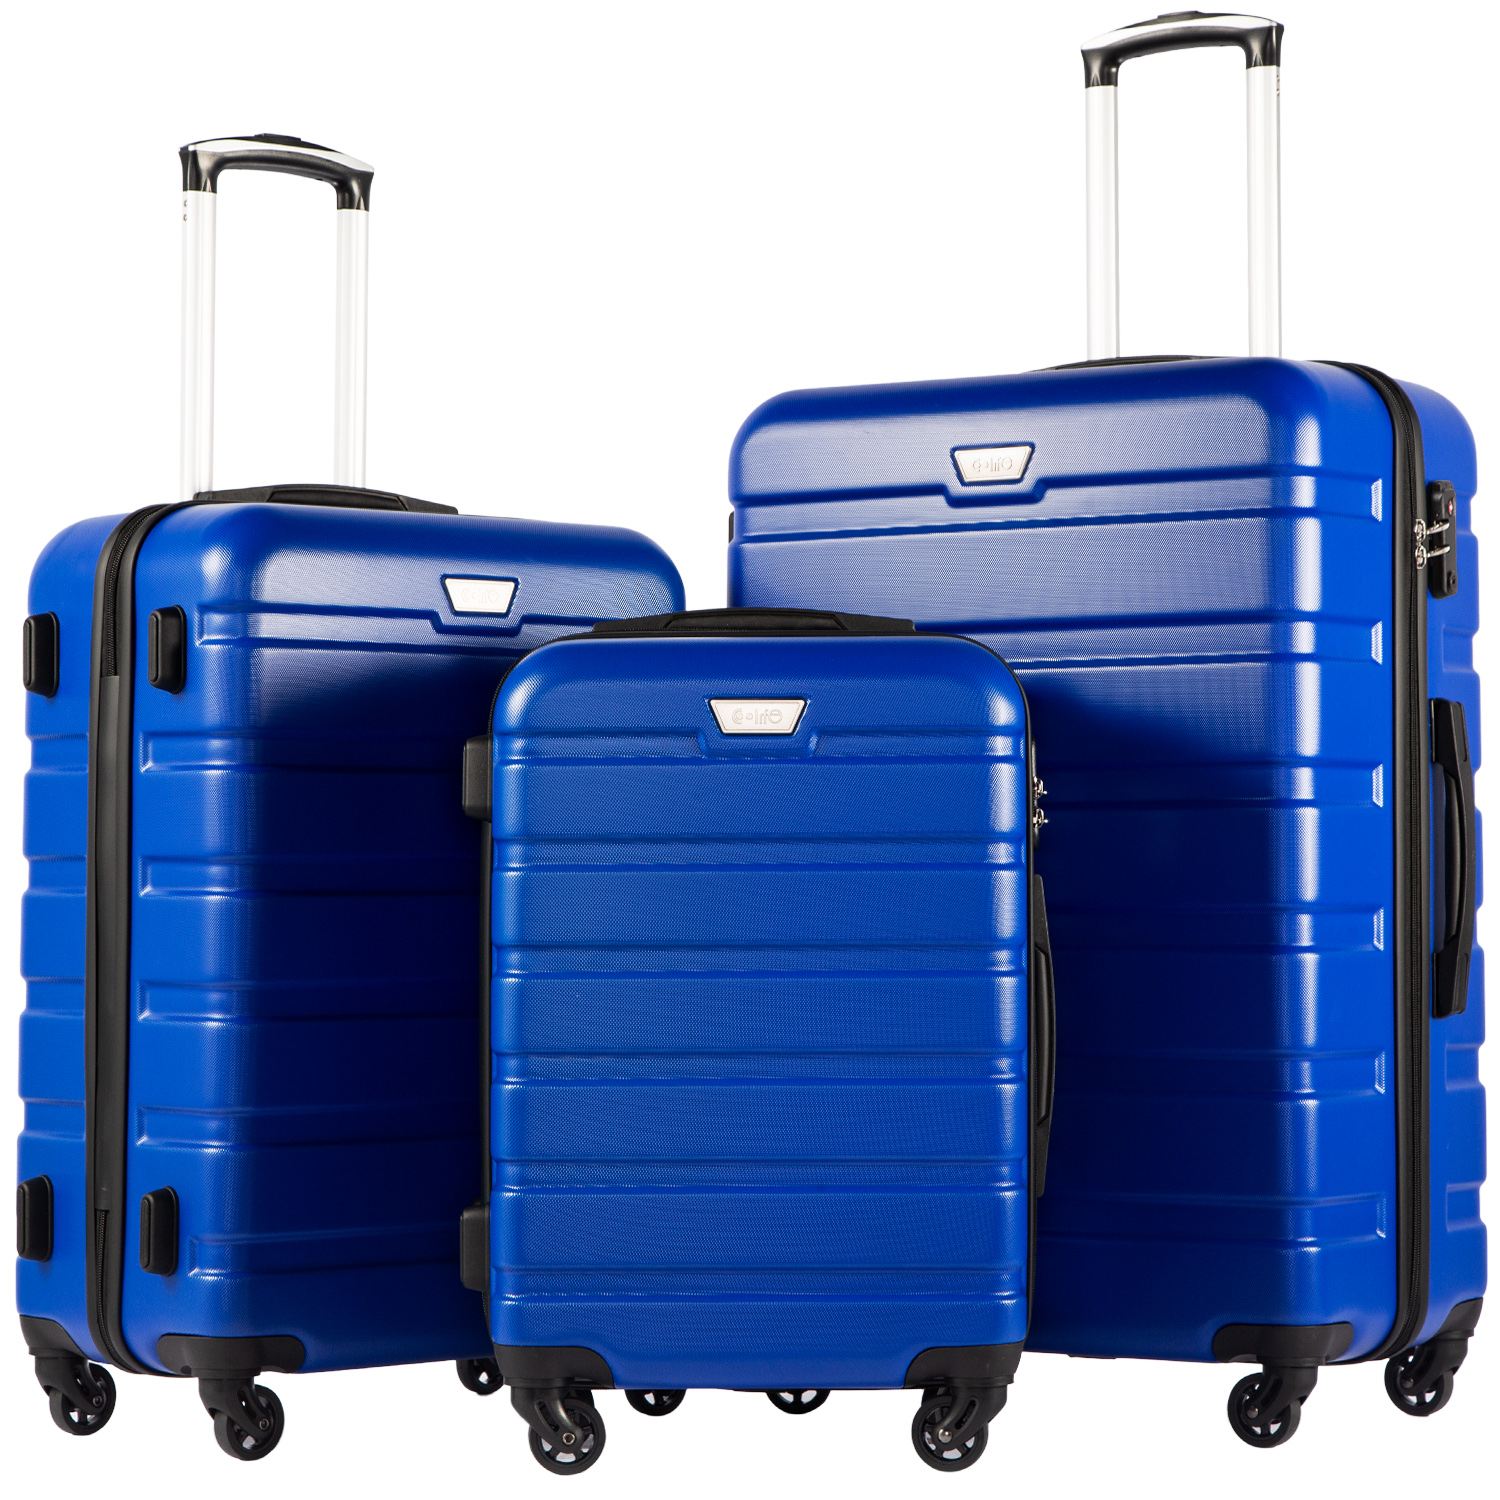 Luggage & Travel Gear Luggage Sets COOLIFE Luggage 3 Piece Set Suitcase ...